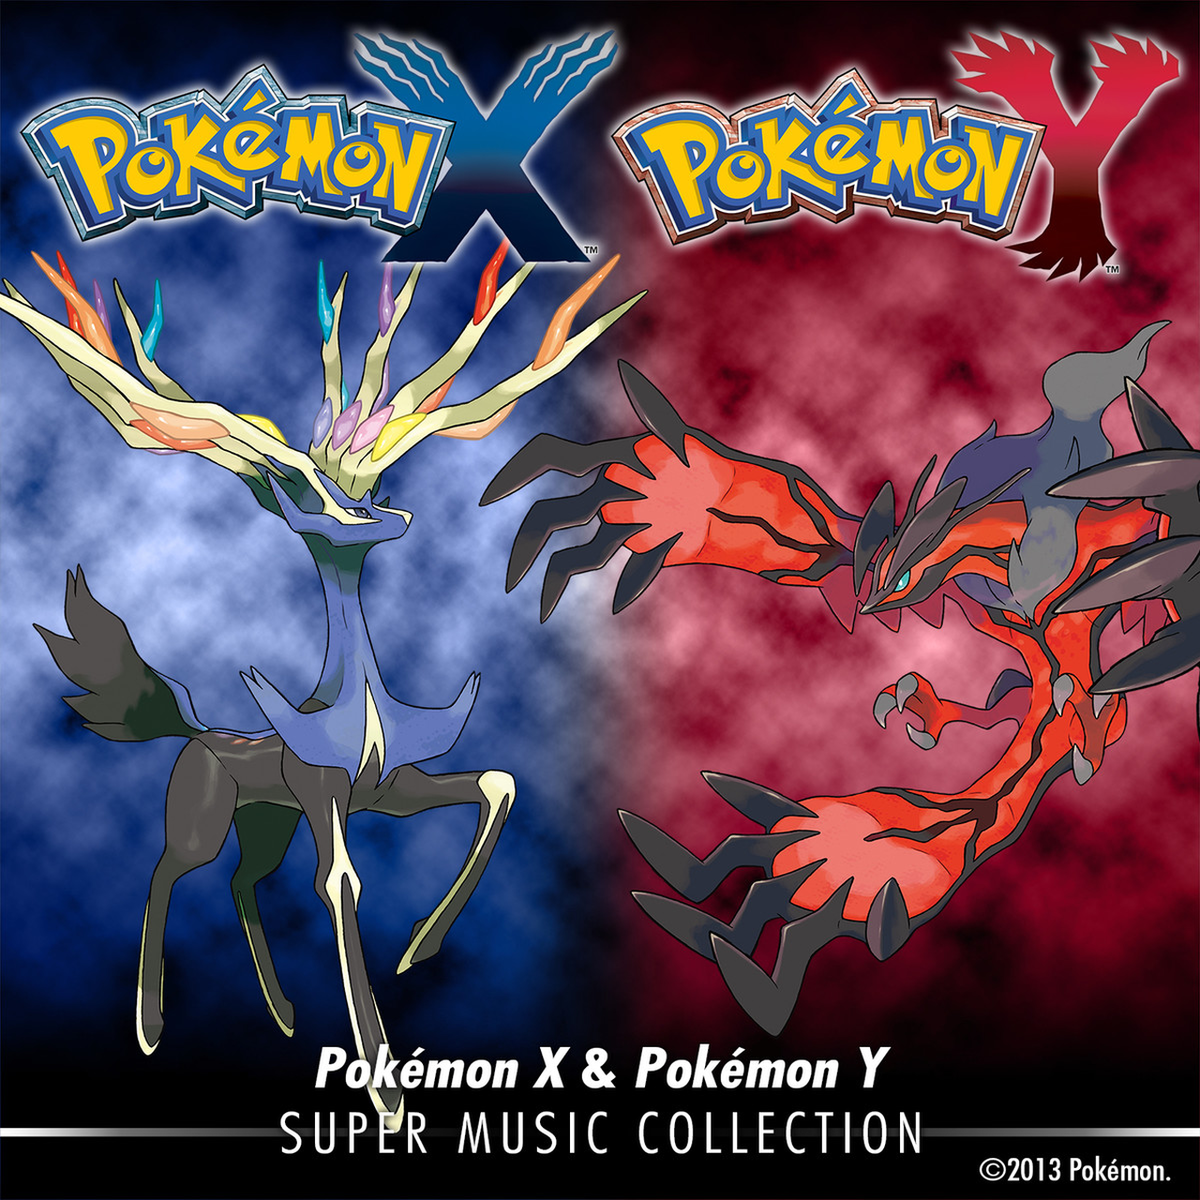 Pokémon X & Pokémon Y: Super Music Collection - Bulbapedia, the